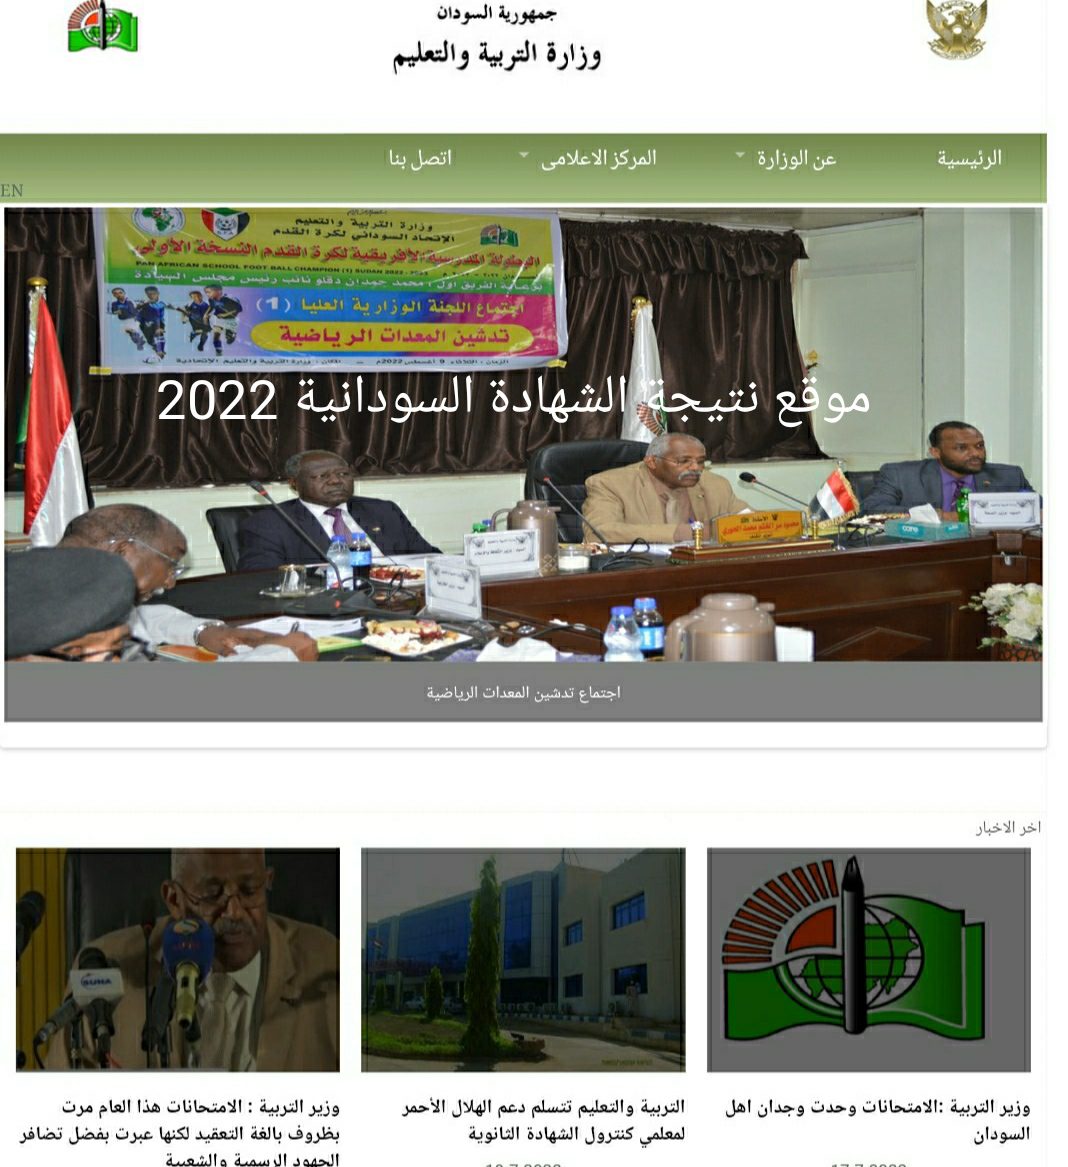 IMG 20220929 002328 - “ظهرت الان” موقع نتيجة الشهادة السودانية 2022 برقم الجلوس نتائج الثانوية العامة في السودان